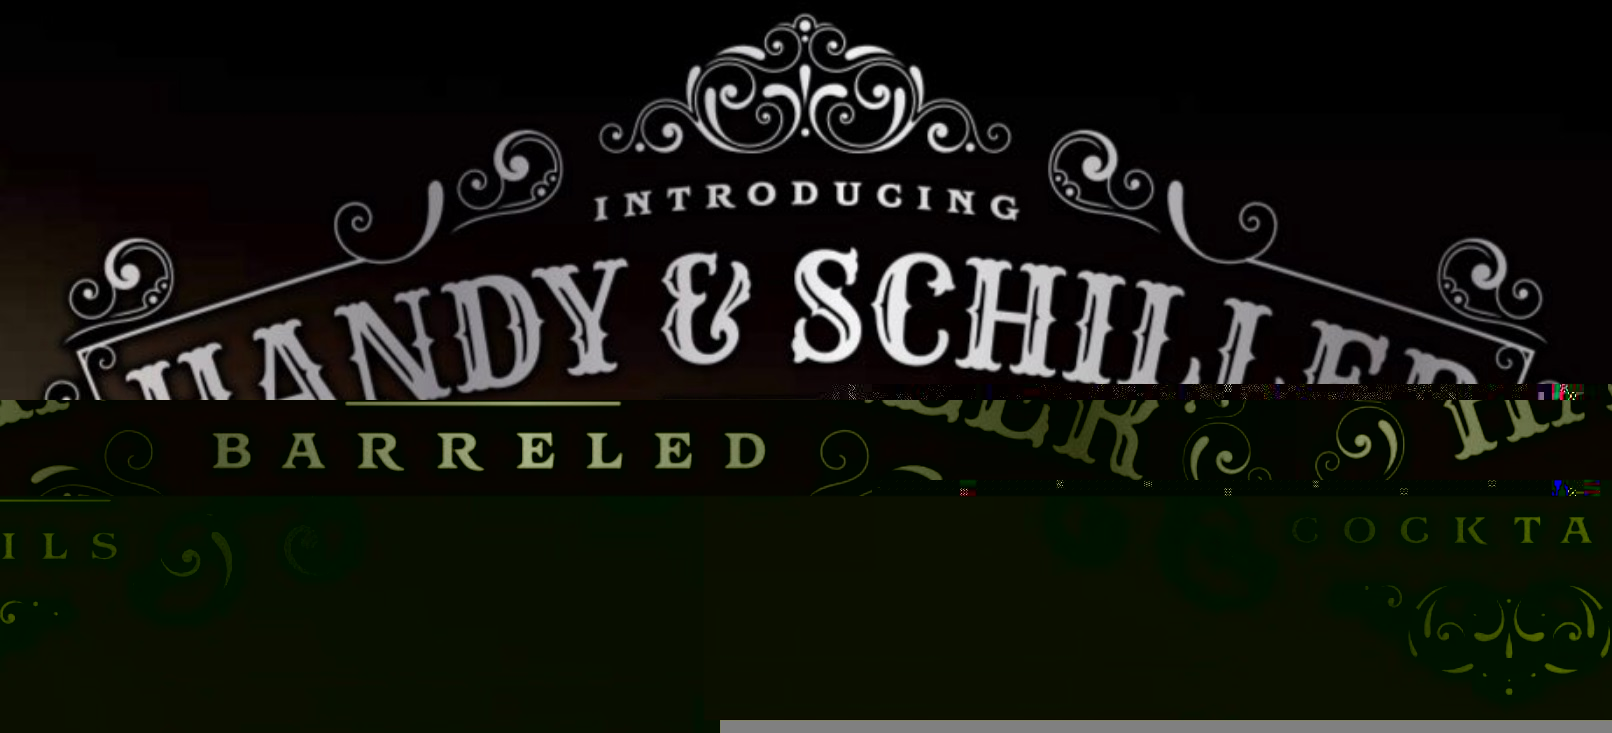 Файл:Handy & Schiller logo.jpg